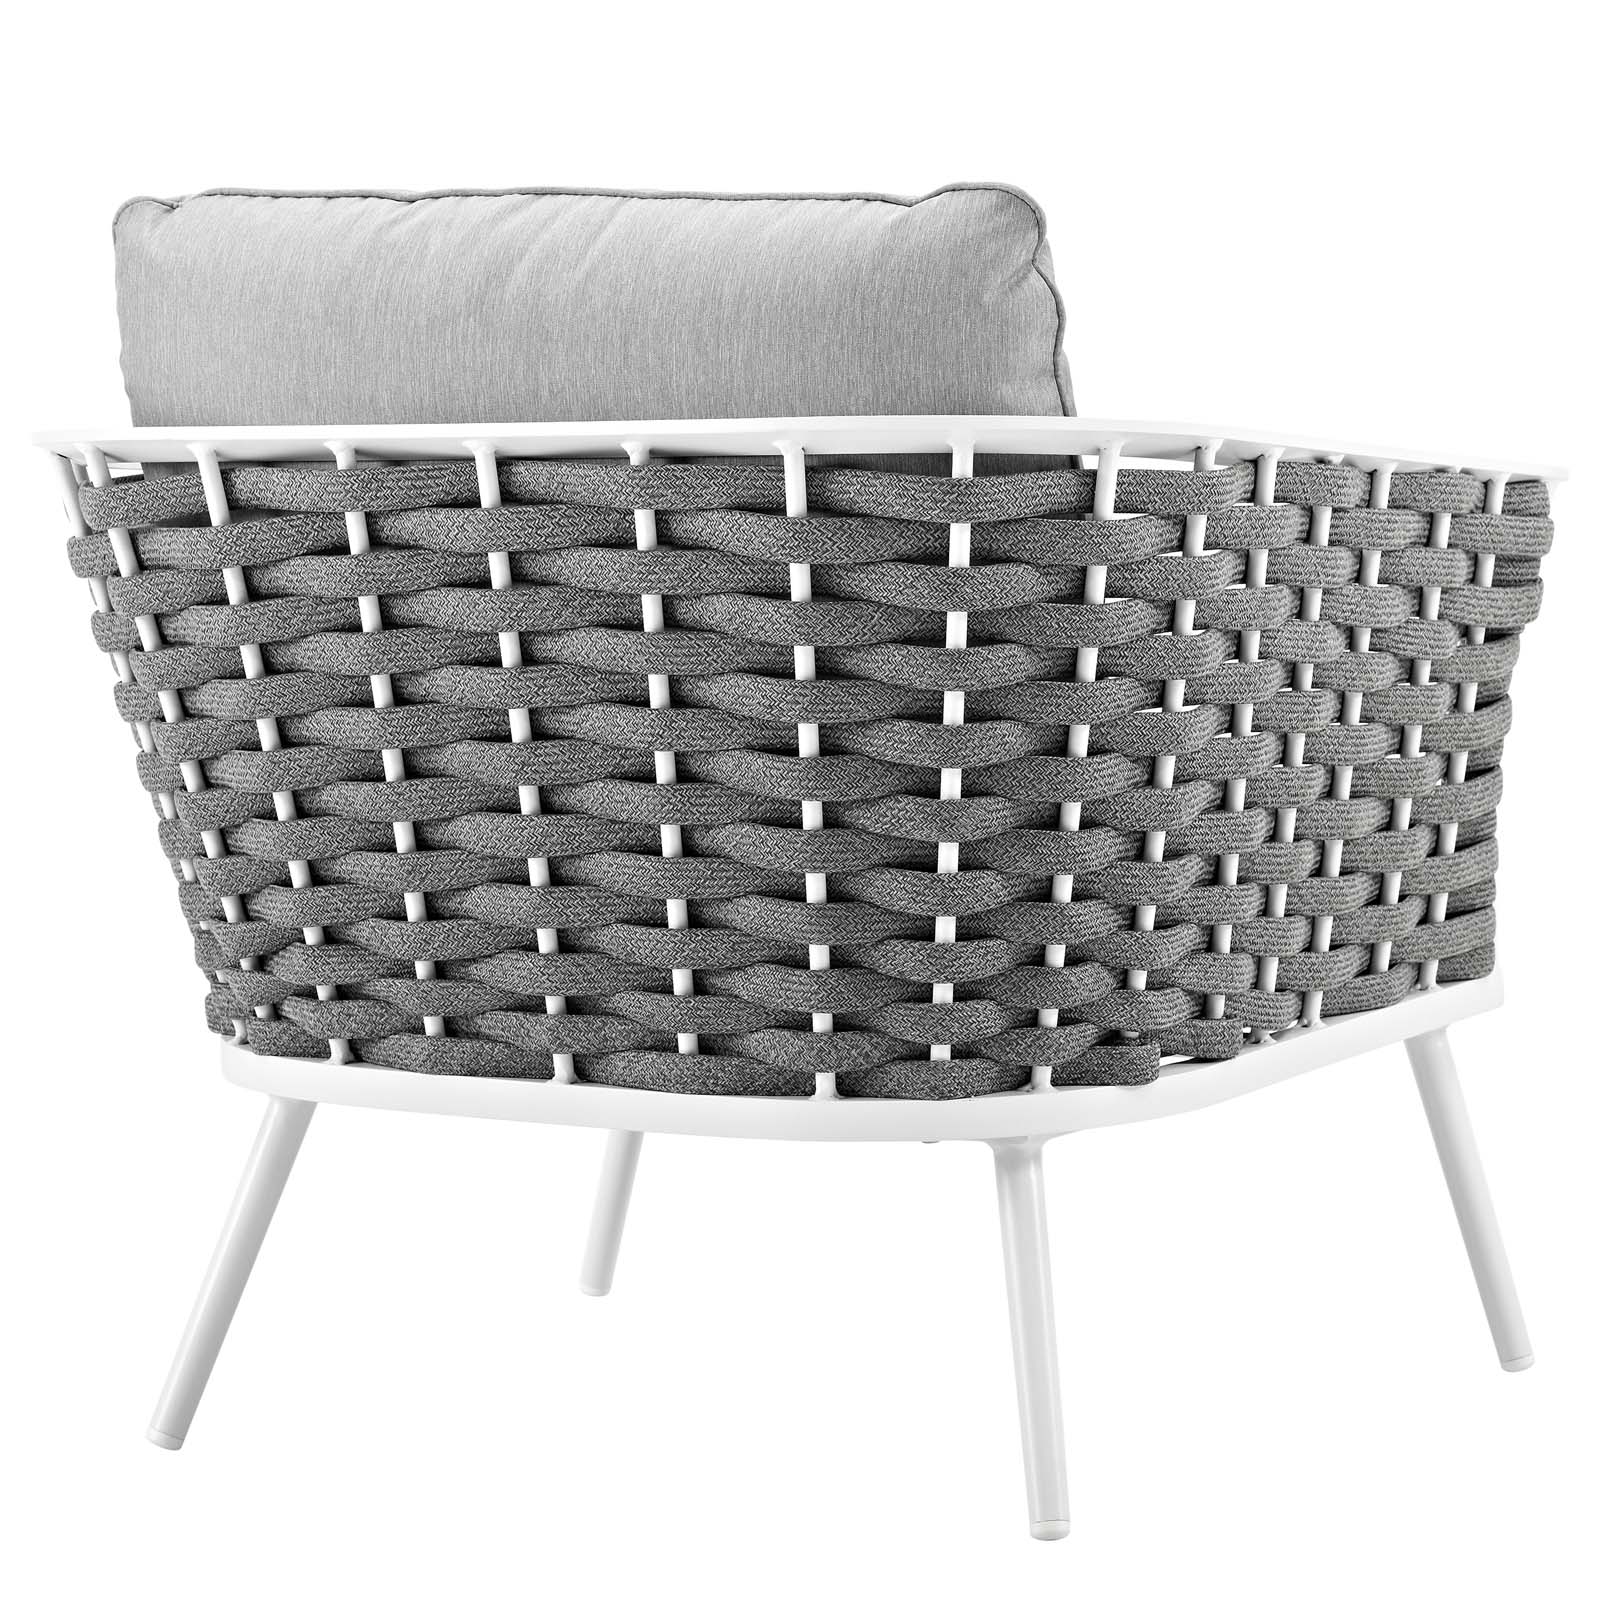 Modern Contemporary Urban Design Outdoor Patio Balcony Garden Furniture Lounge Chair Armchair, Aluminum Metal Steel, White - image 4 of 4